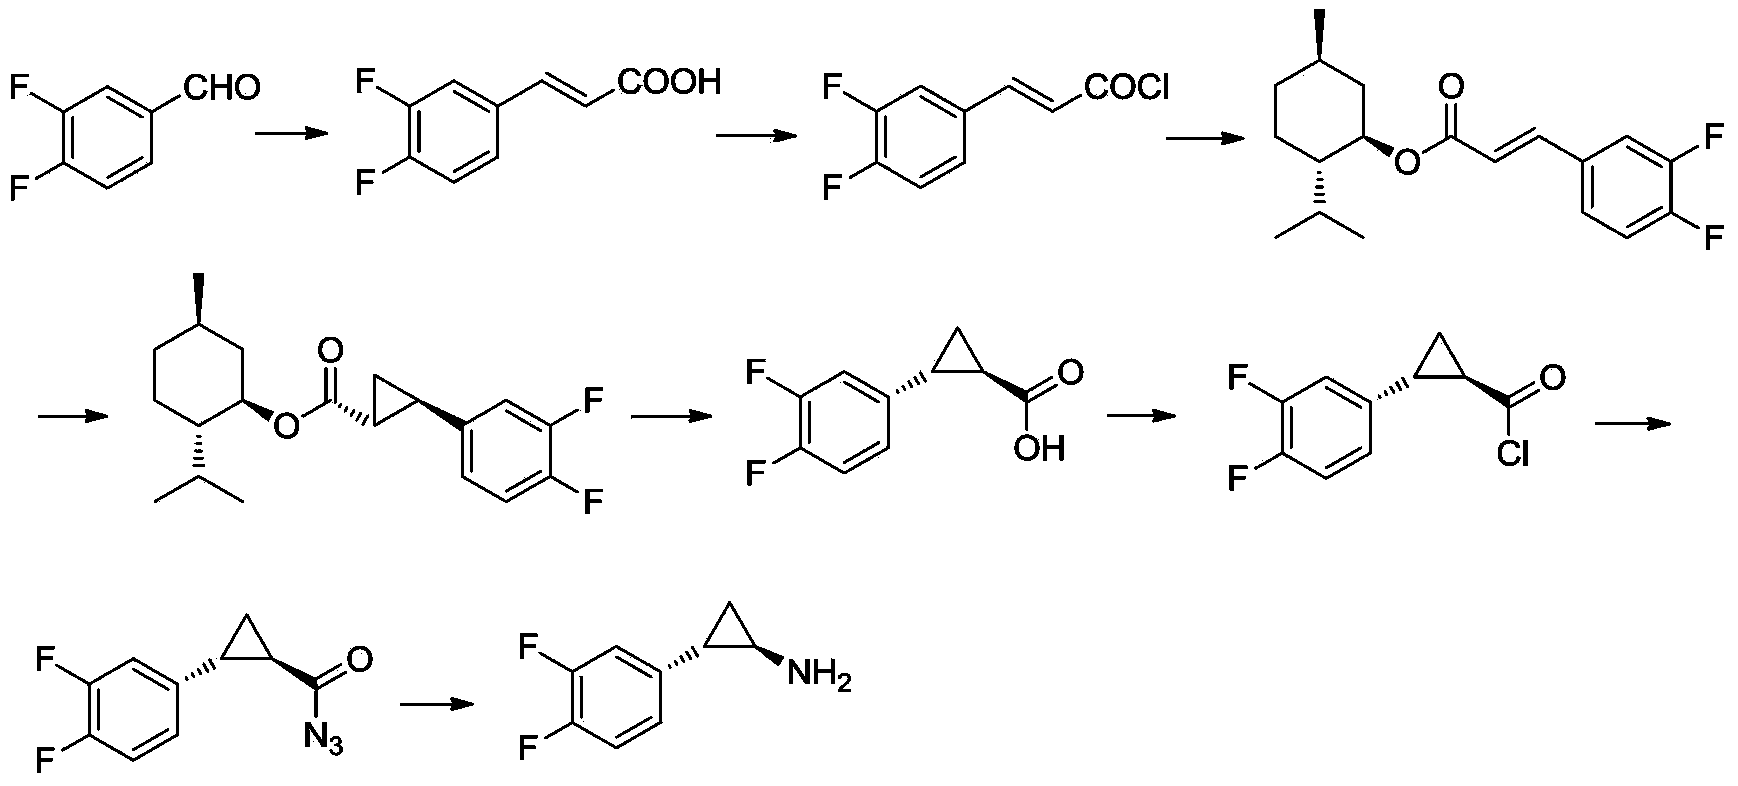 Method for preparing (1R,2S)-2-(3,4-difluorophenyl) -cyclopropylamine